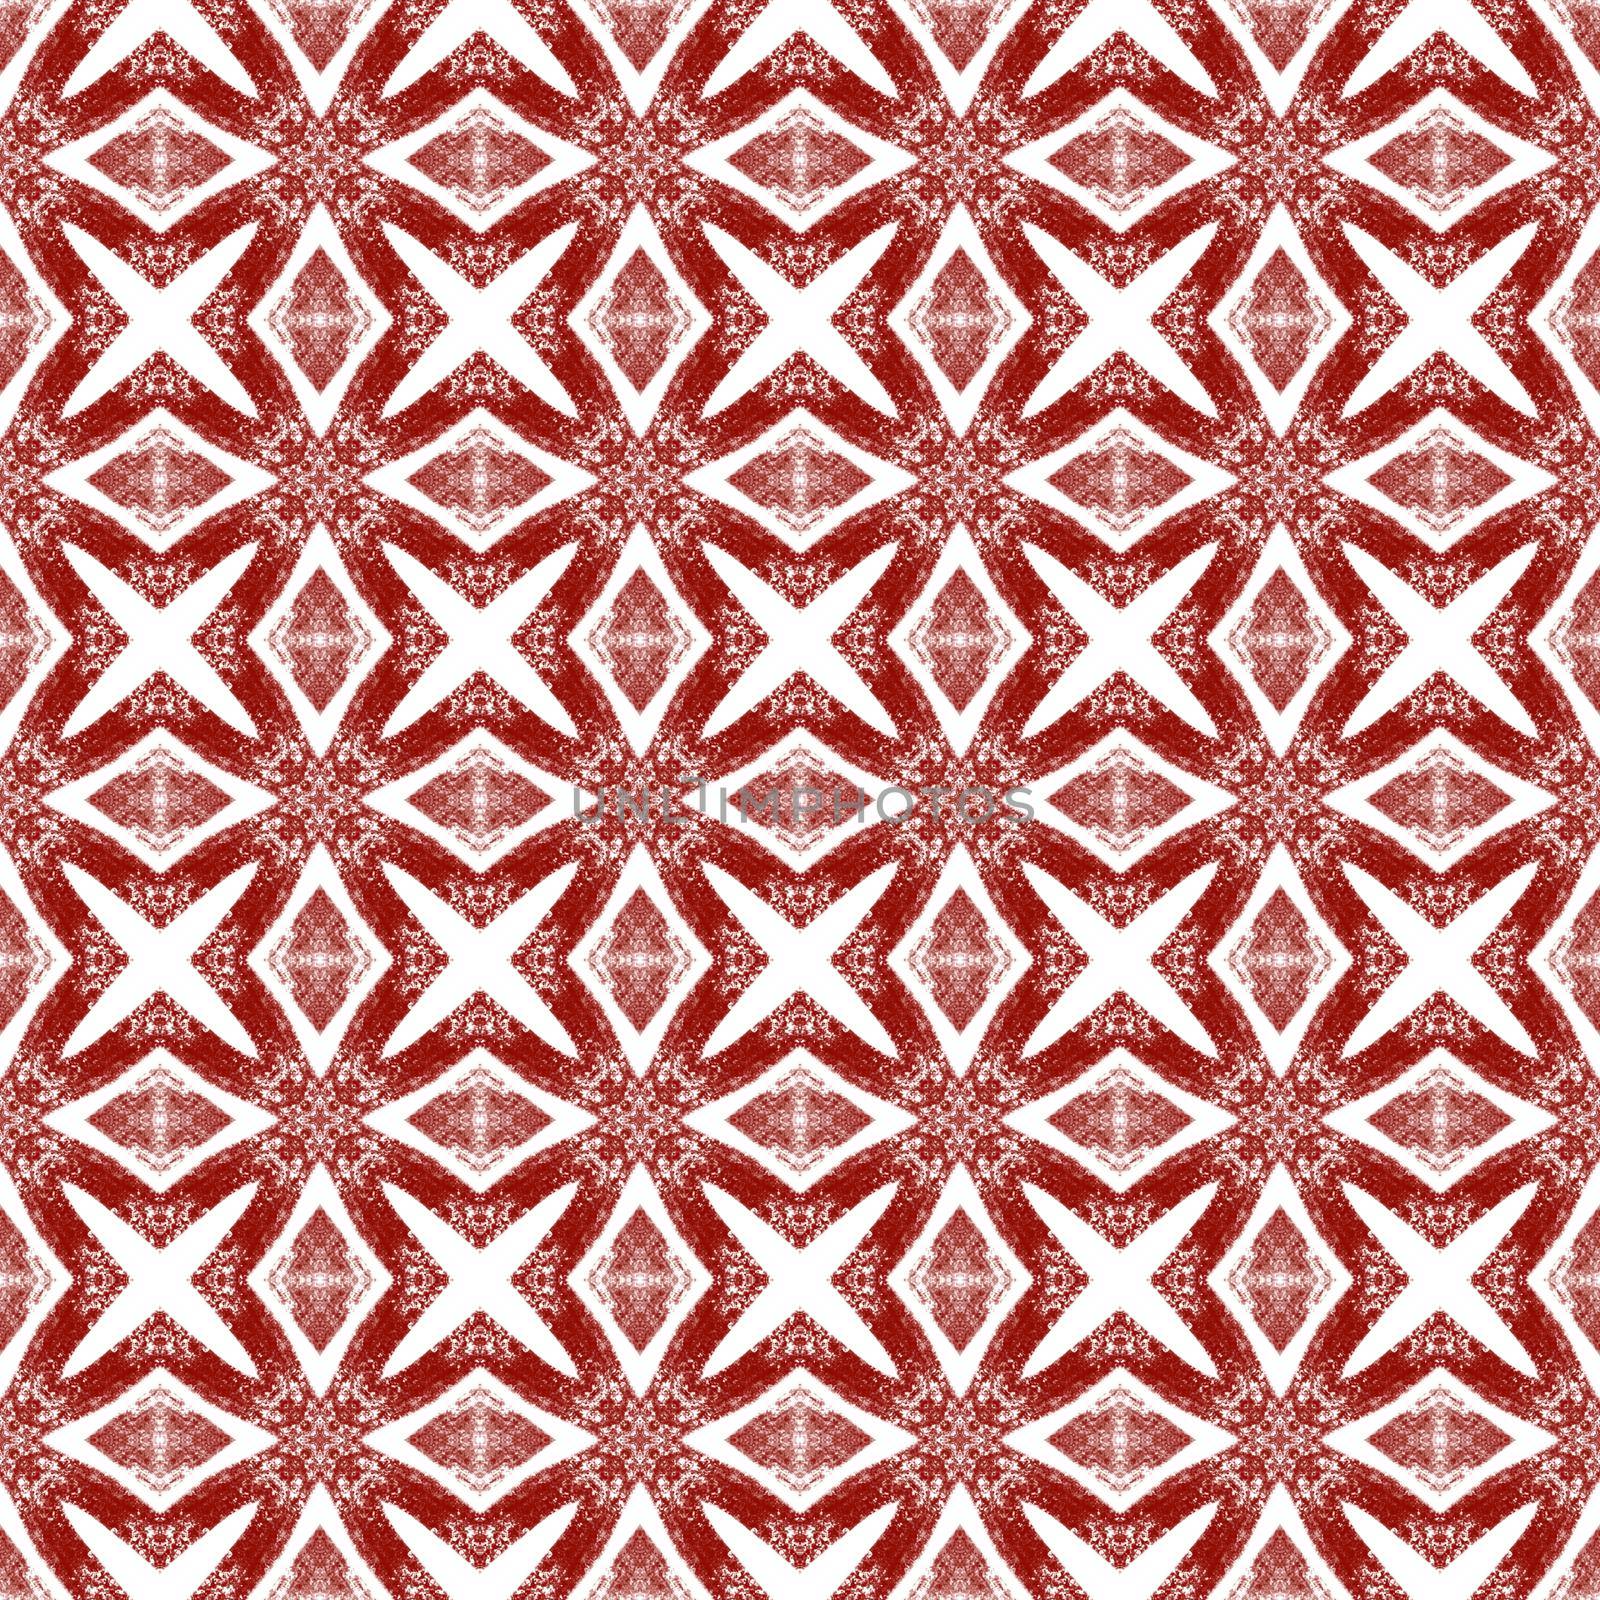 Textured stripes pattern. Wine red symmetrical kaleidoscope background. Trendy textured stripes design. Textile ready extra print, swimwear fabric, wallpaper, wrapping.